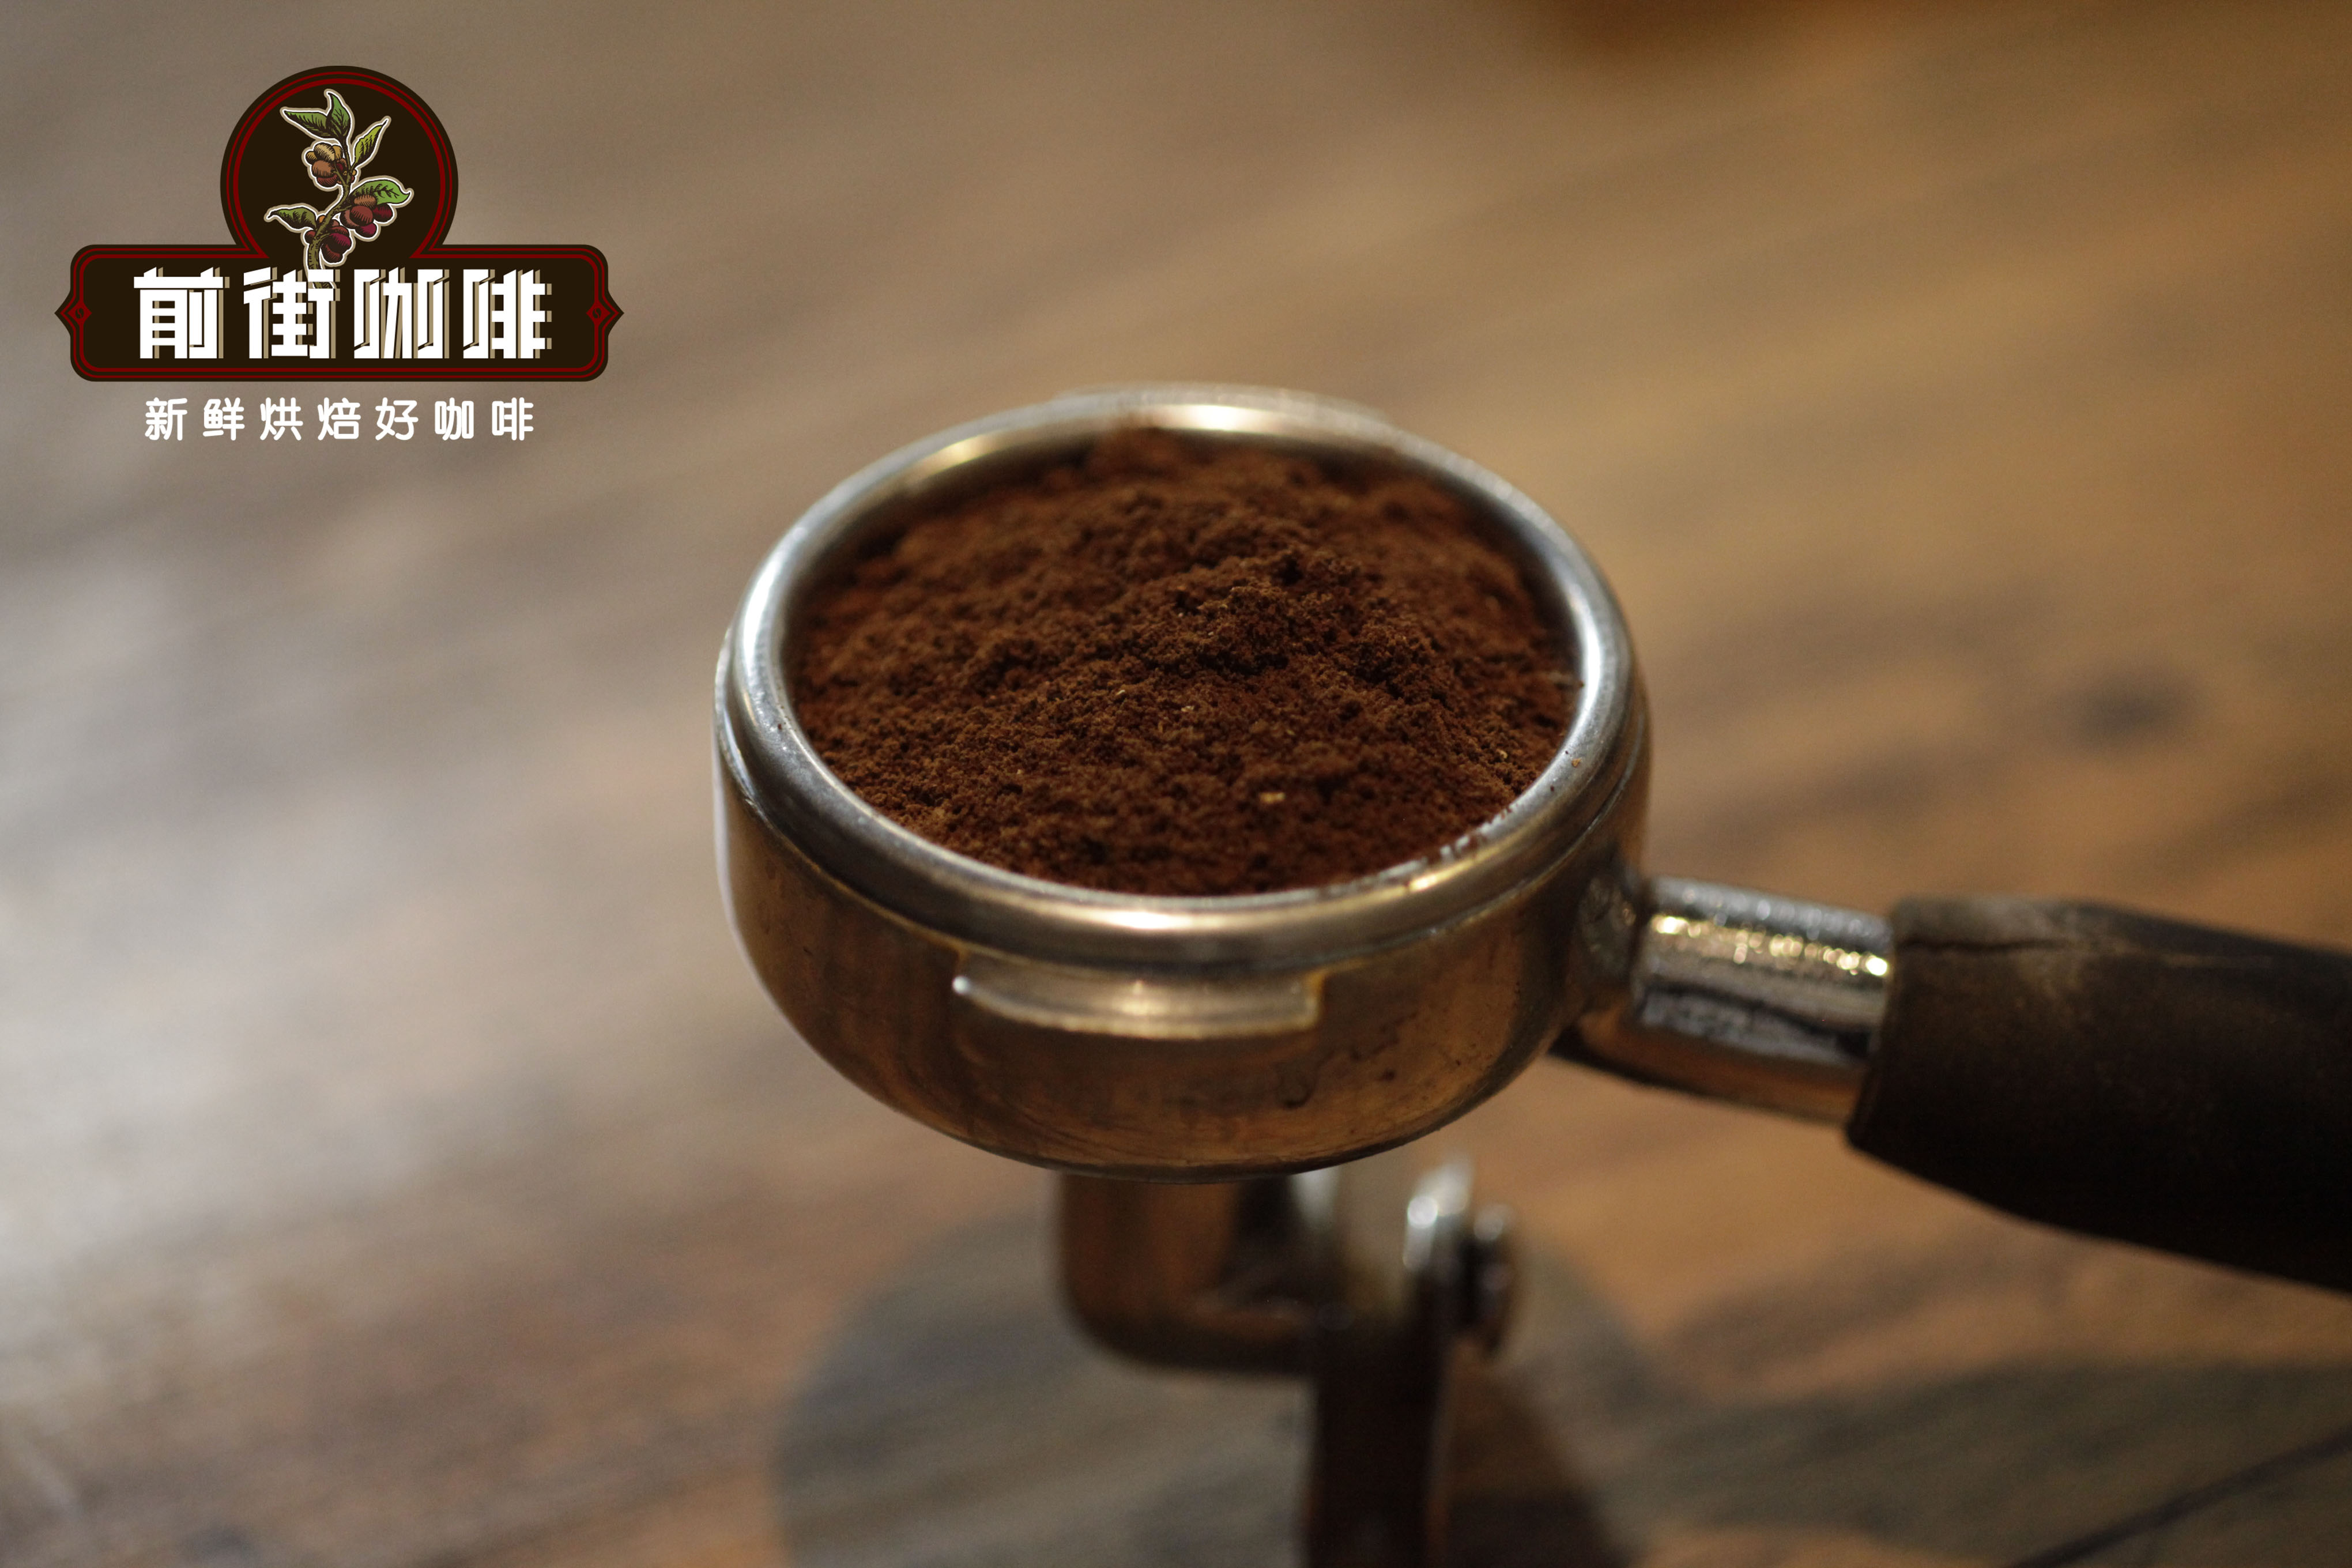 Starbucks Flora Coffee introduces the Origin Story of Flora Comprehensive Coffee Bean Origin